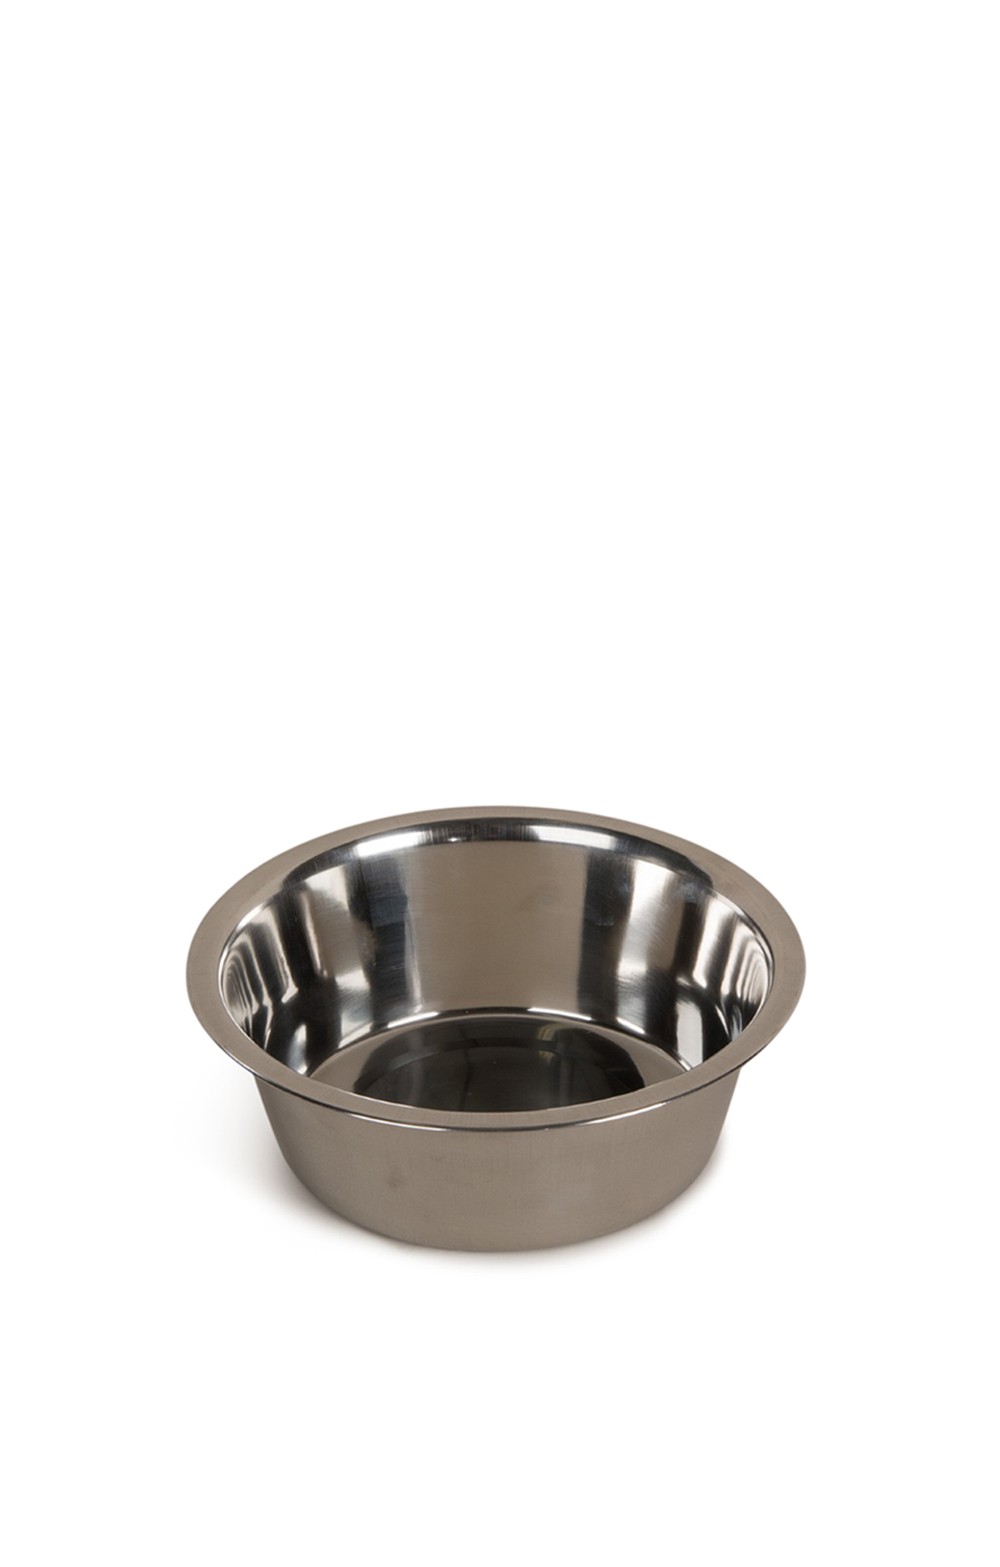 House Of Bruar Small Stainless Steel Non-Slip Dog Bowl